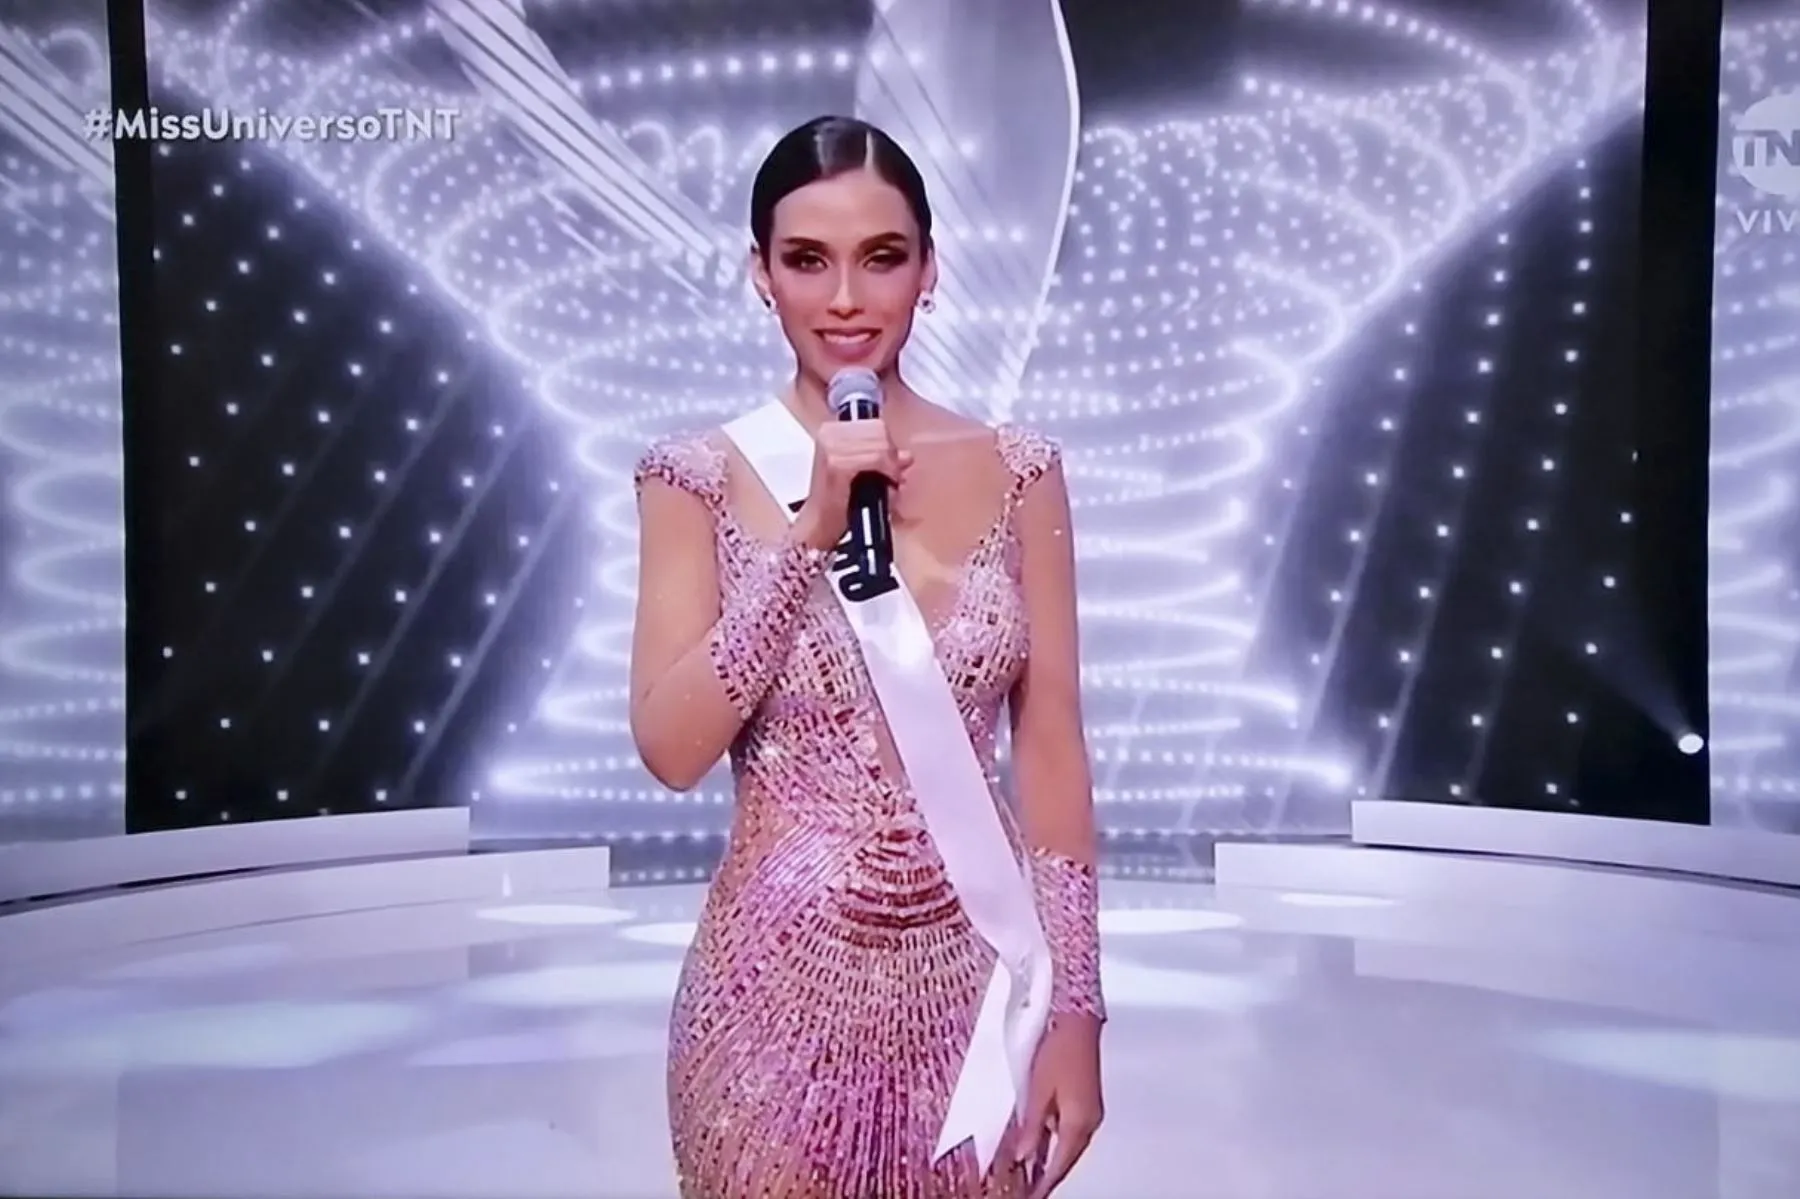 Peruanos arremeten en redes sociales contra Miss Universo